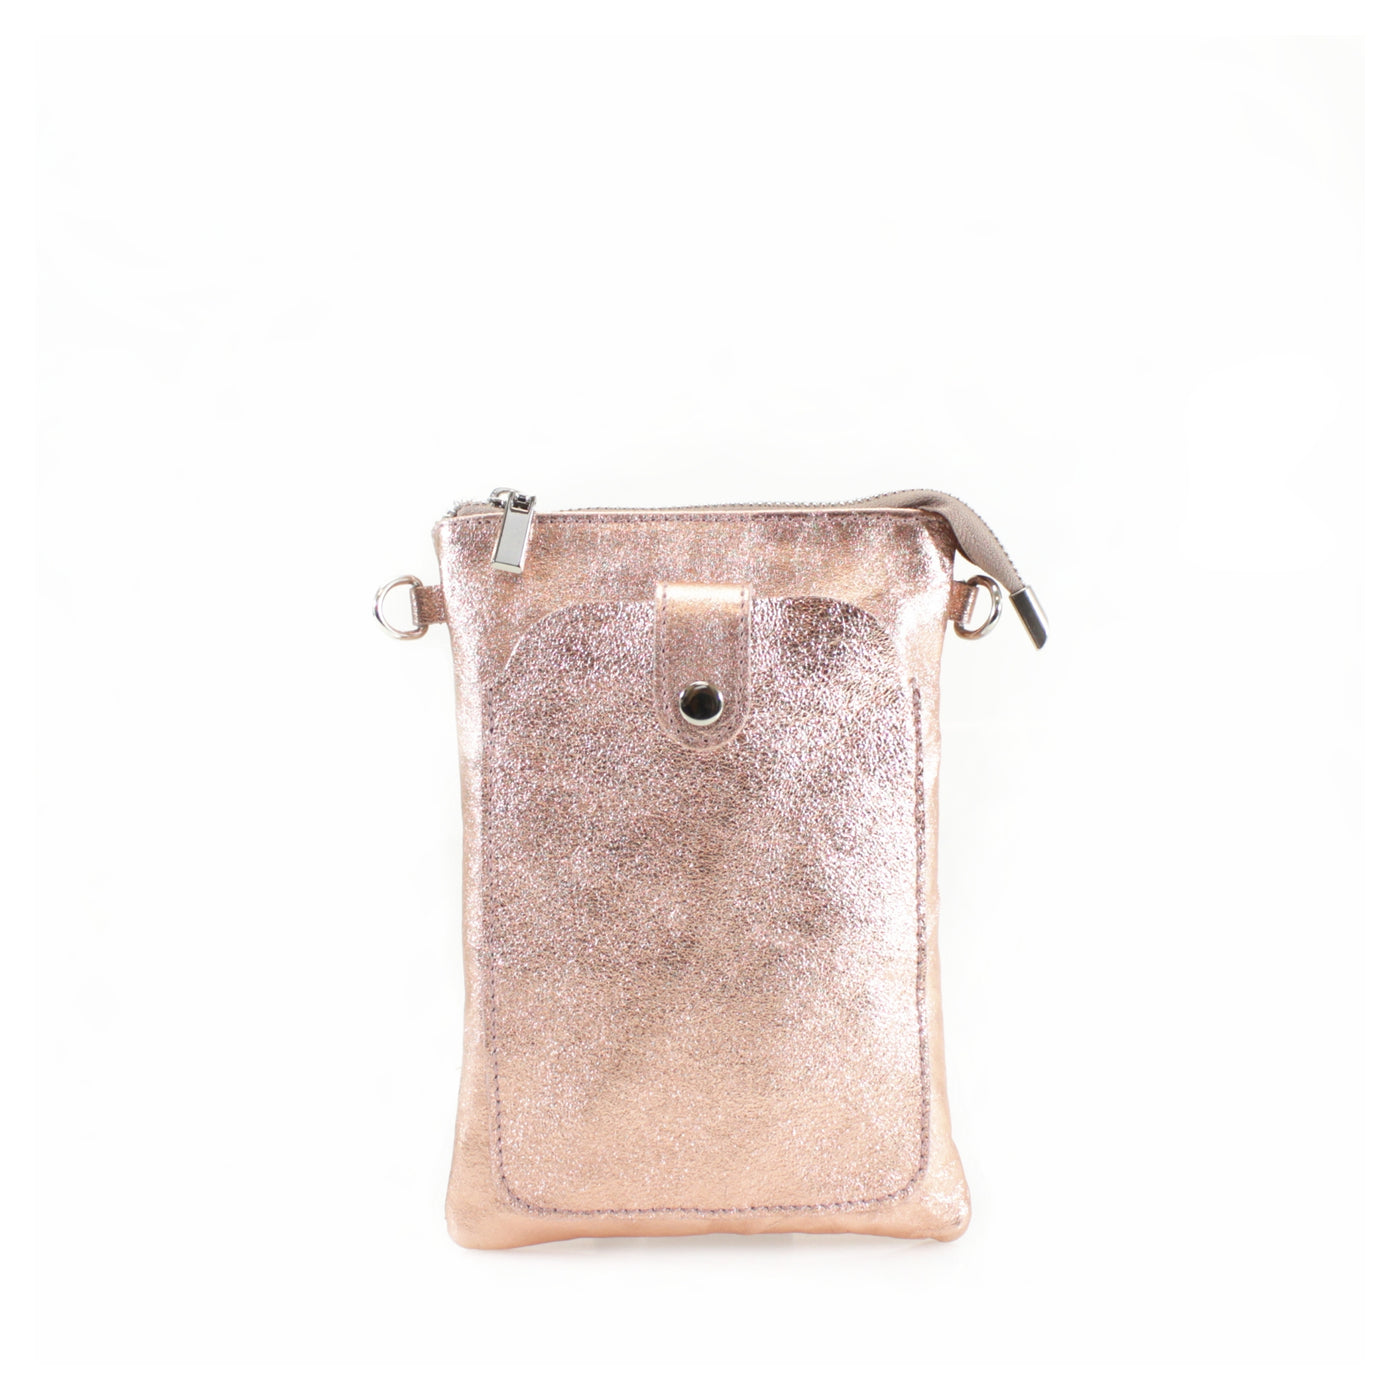 Leather Press-stud Phone Handbag - METALLIC ROSE GOLD